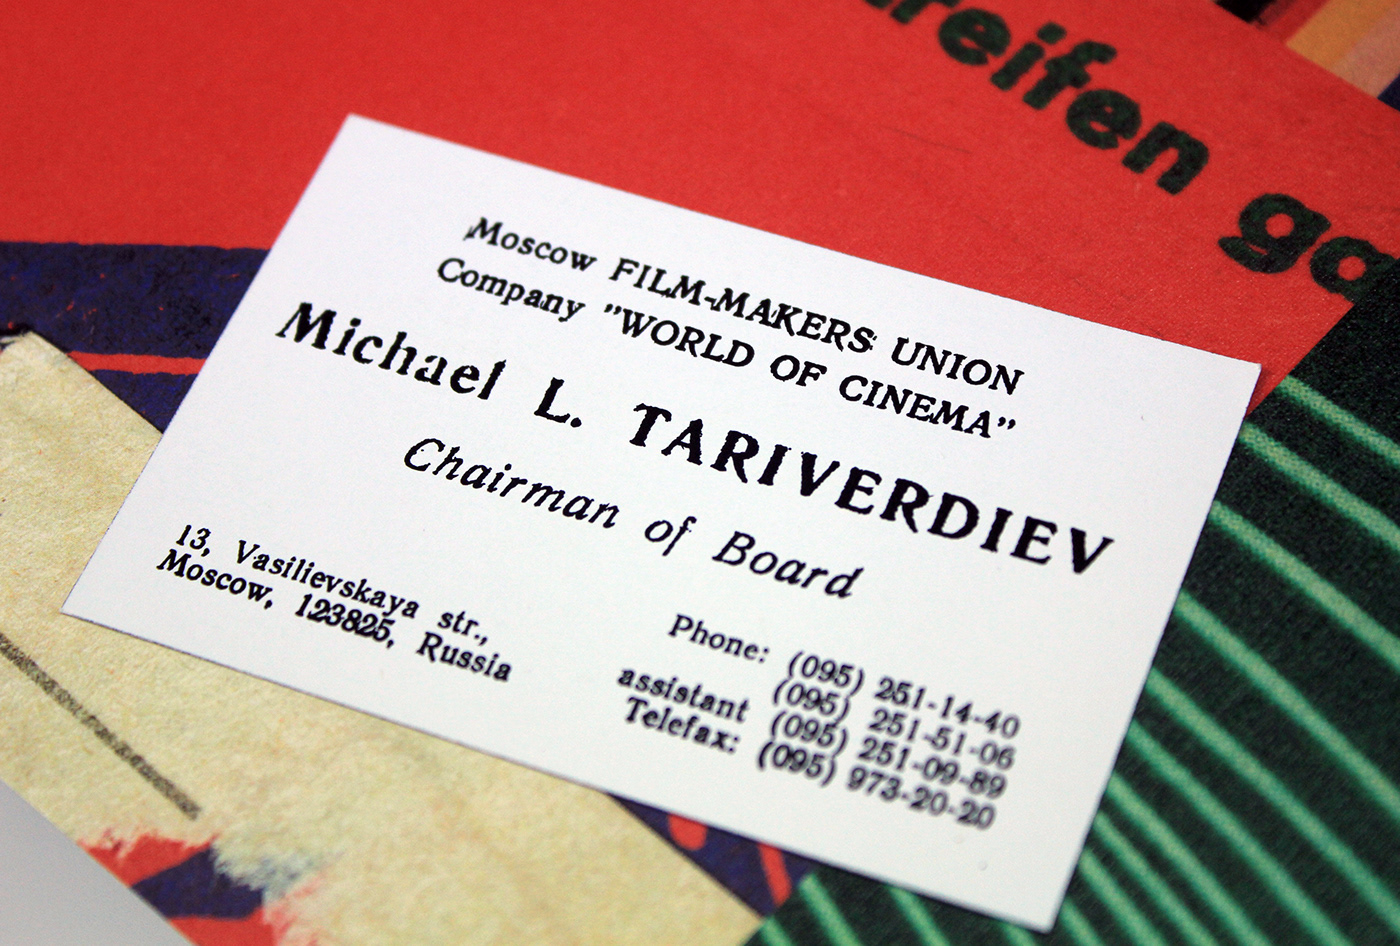 tariverdiev soundtrack OST box set soviet design packaging design russian music film music vinyl LP